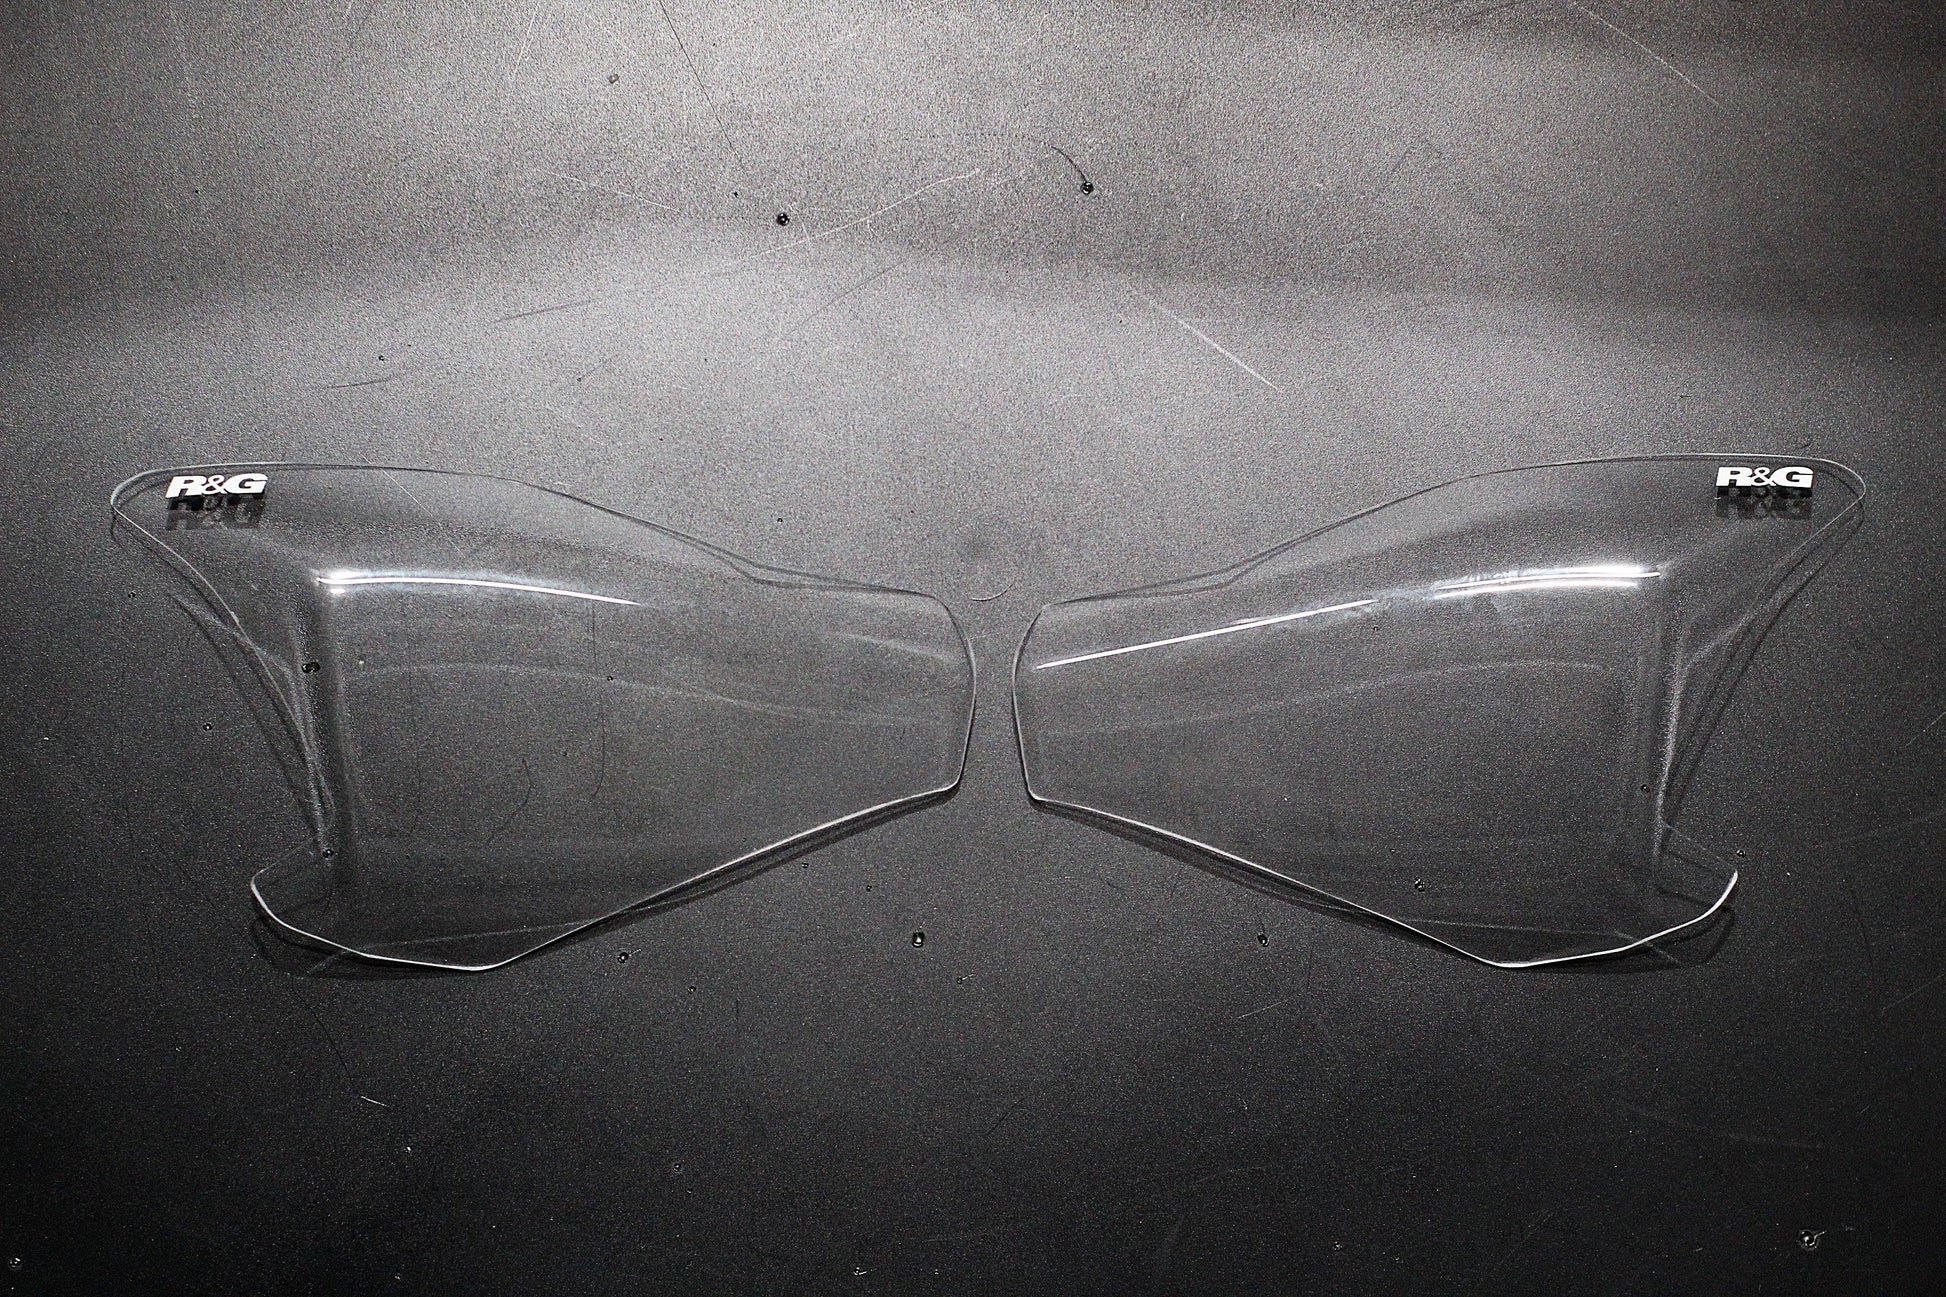 R&G Headlight Shields fits for Kawasaki Z900 ('17-'19) - Durian Bikers